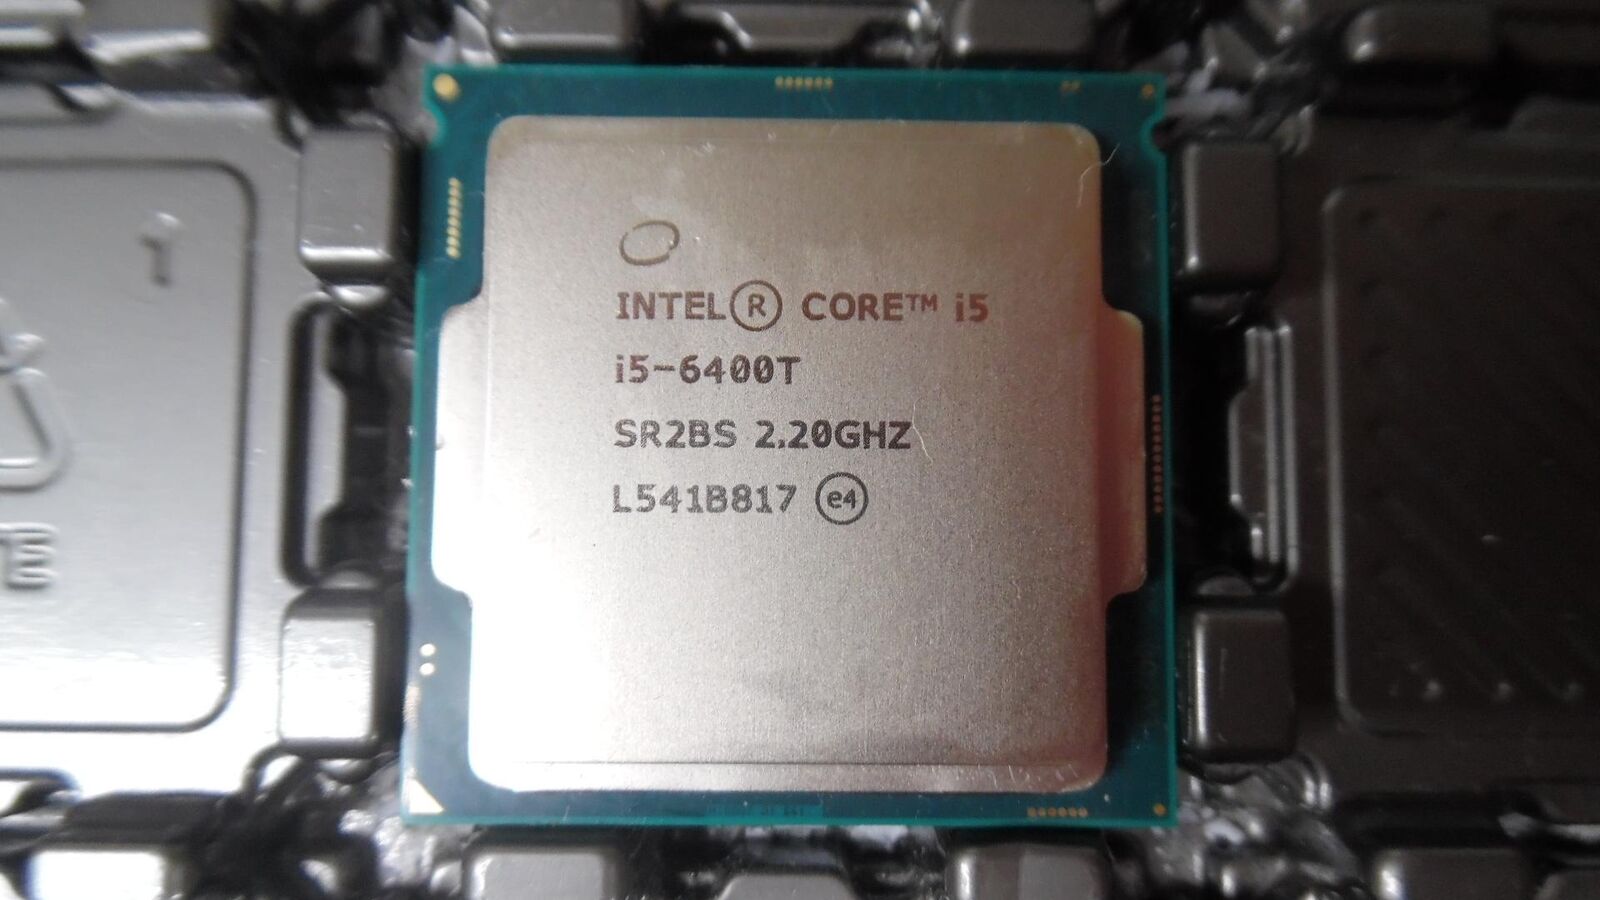 Intel Core i5-6400T - 2.20GHz Quad Core CPU Processor SR2BS #2